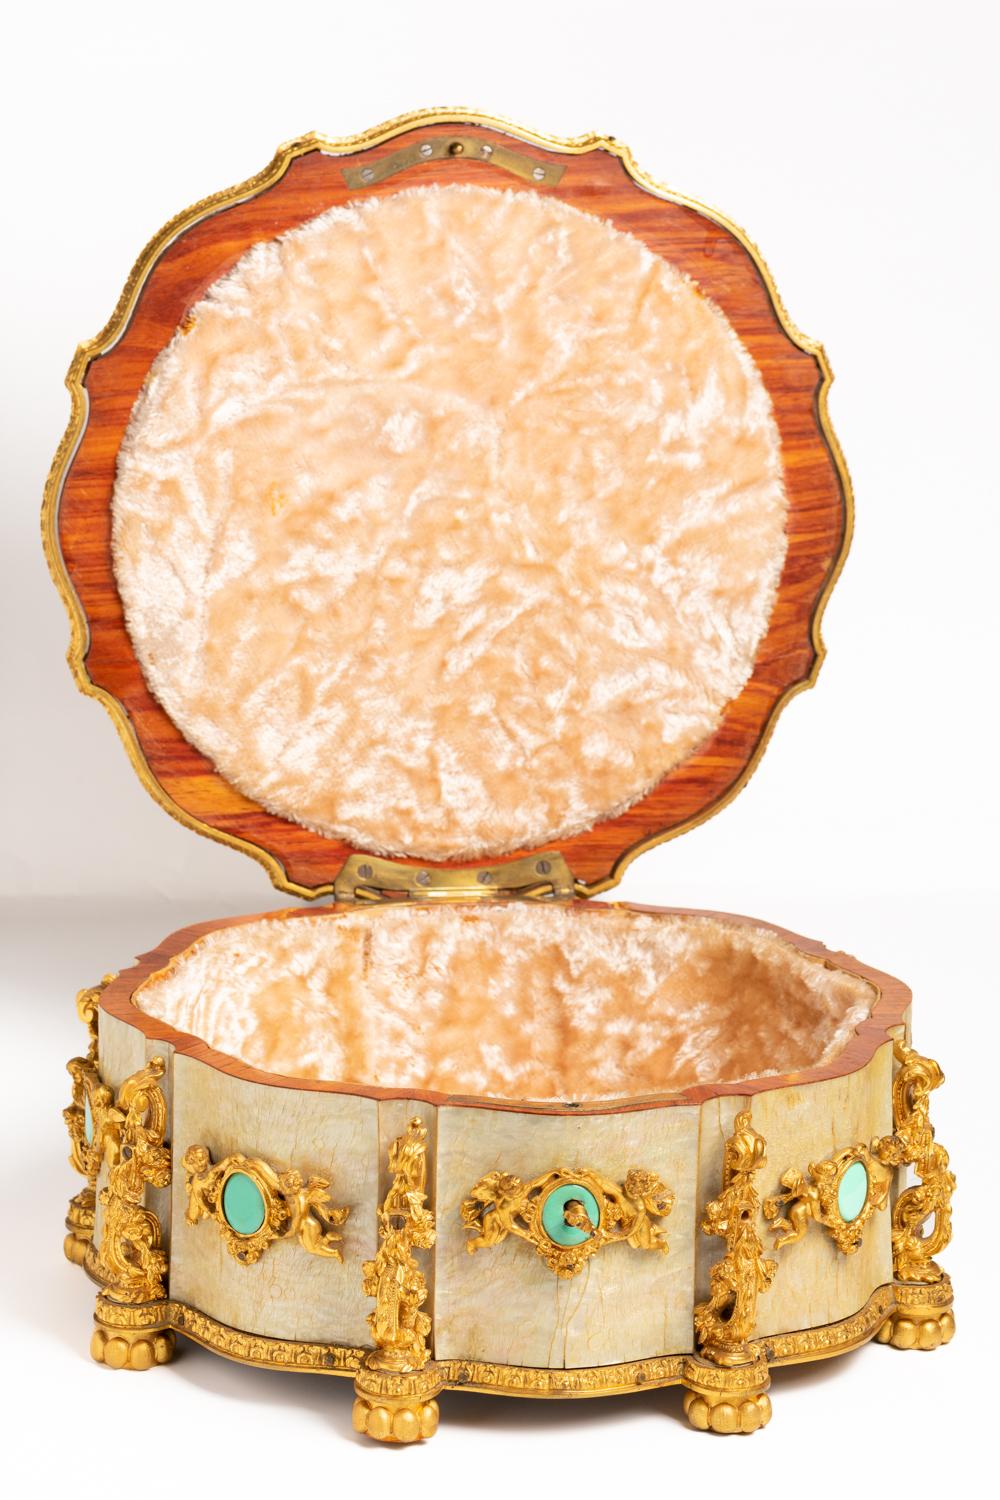 18th century jewelry